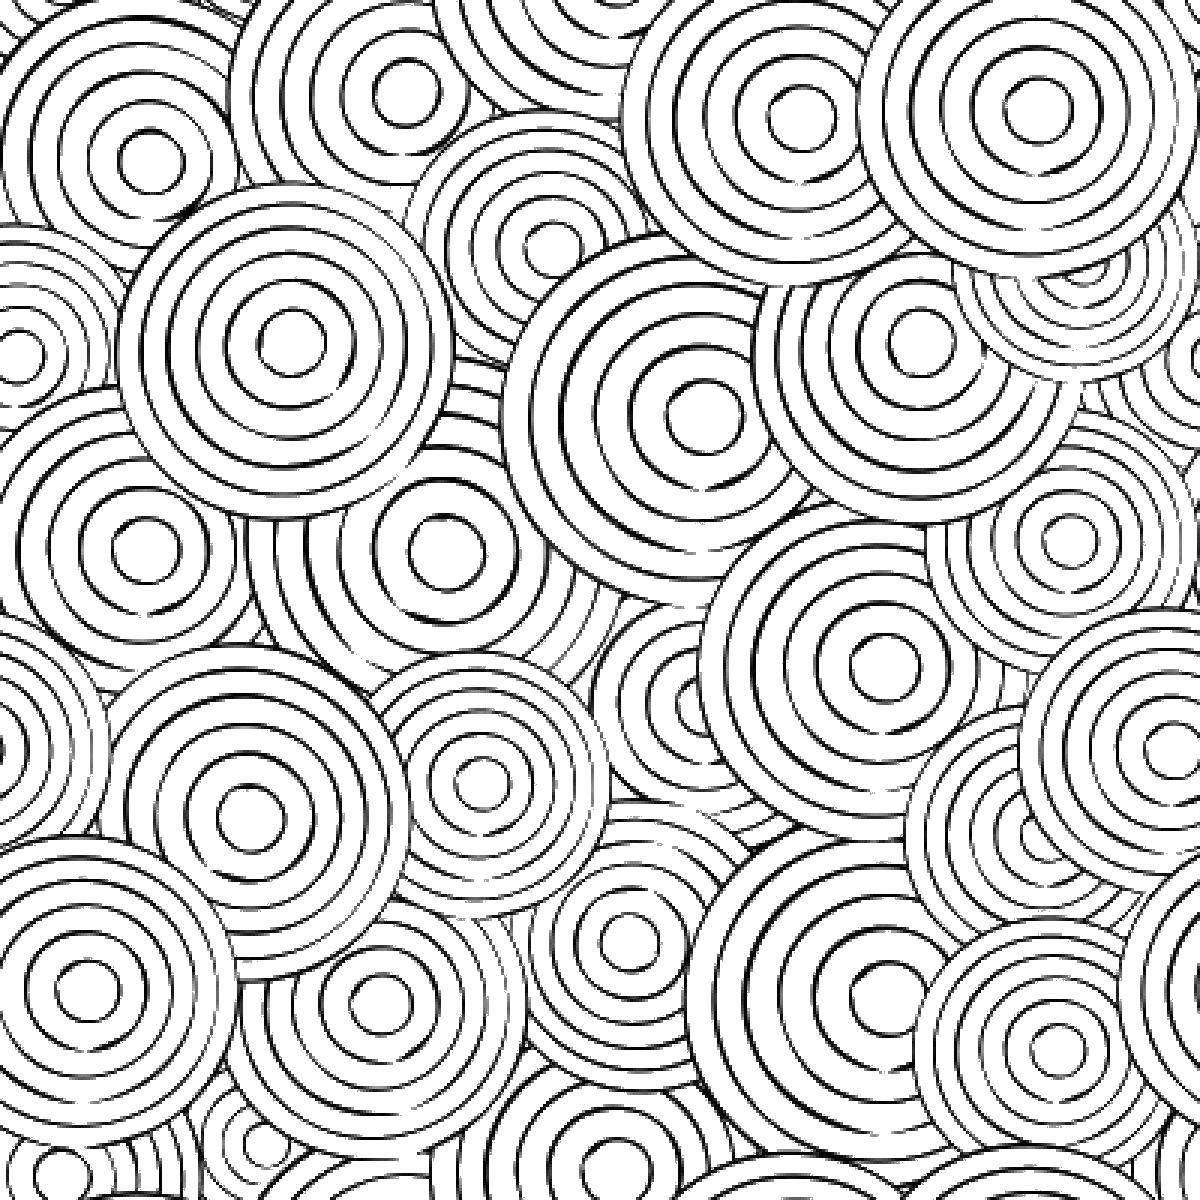 Coloring Circles patterns.. Category coloring antistress. Tags:  pattern, shape, circles.